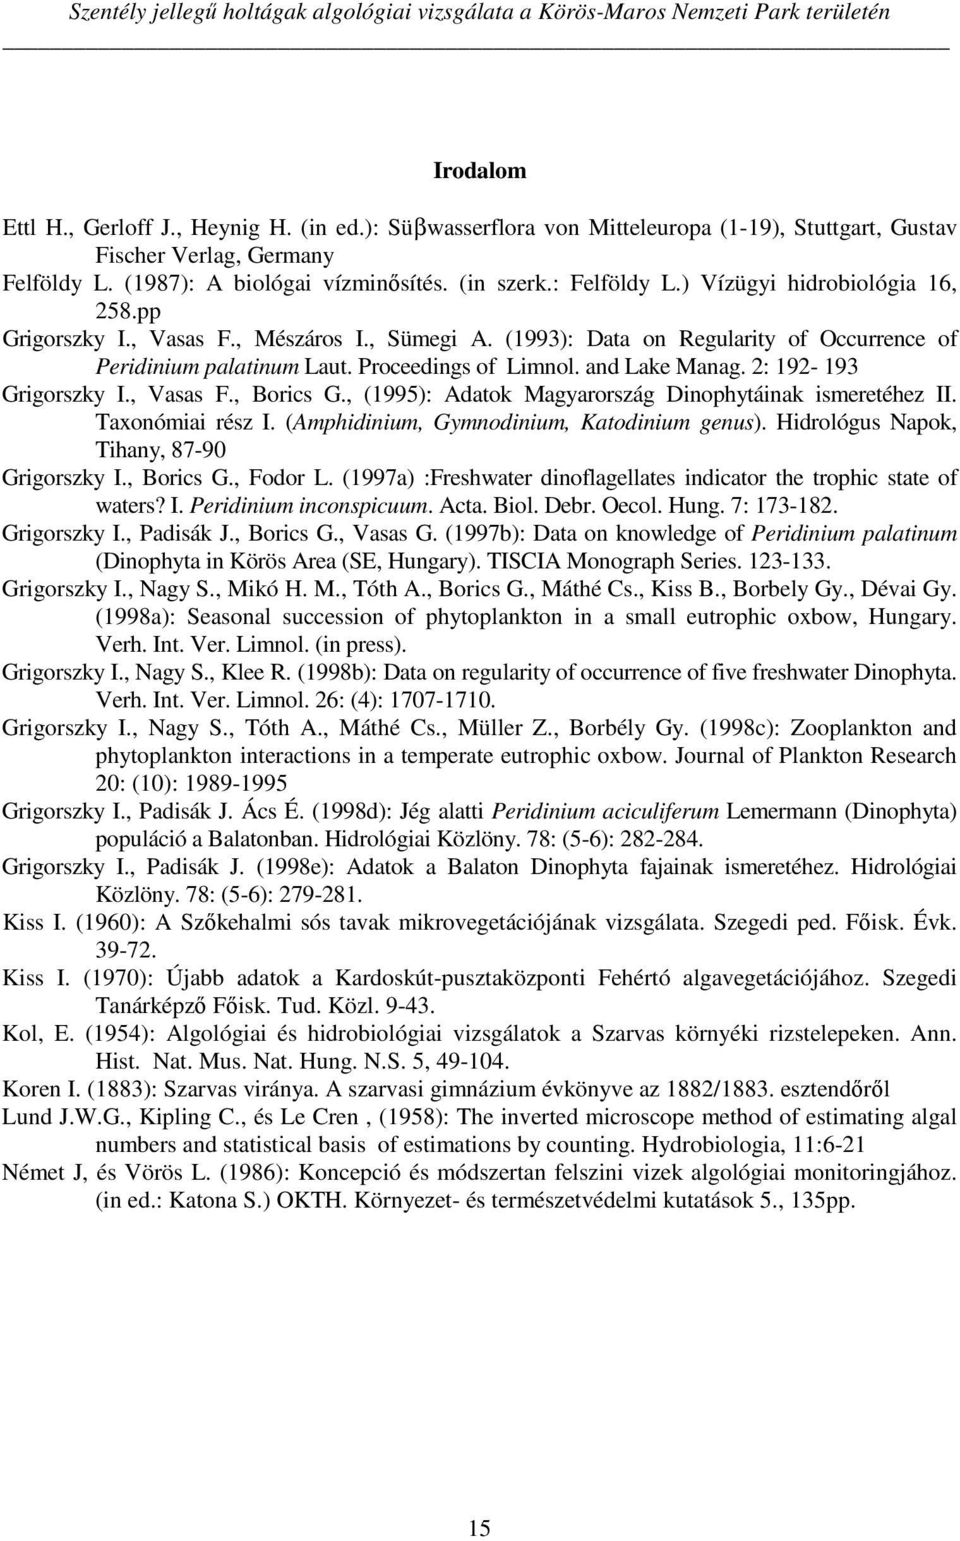 pp Grigorszky I., Vasas F., Mészáros I., Sümegi A. (1993): Data on Regularity of Occurrence of Peridinium palatinum Laut. Proceedings of Limnol. and Lake Manag. 2: 192-193 Grigorszky I., Vasas F., Borics G.